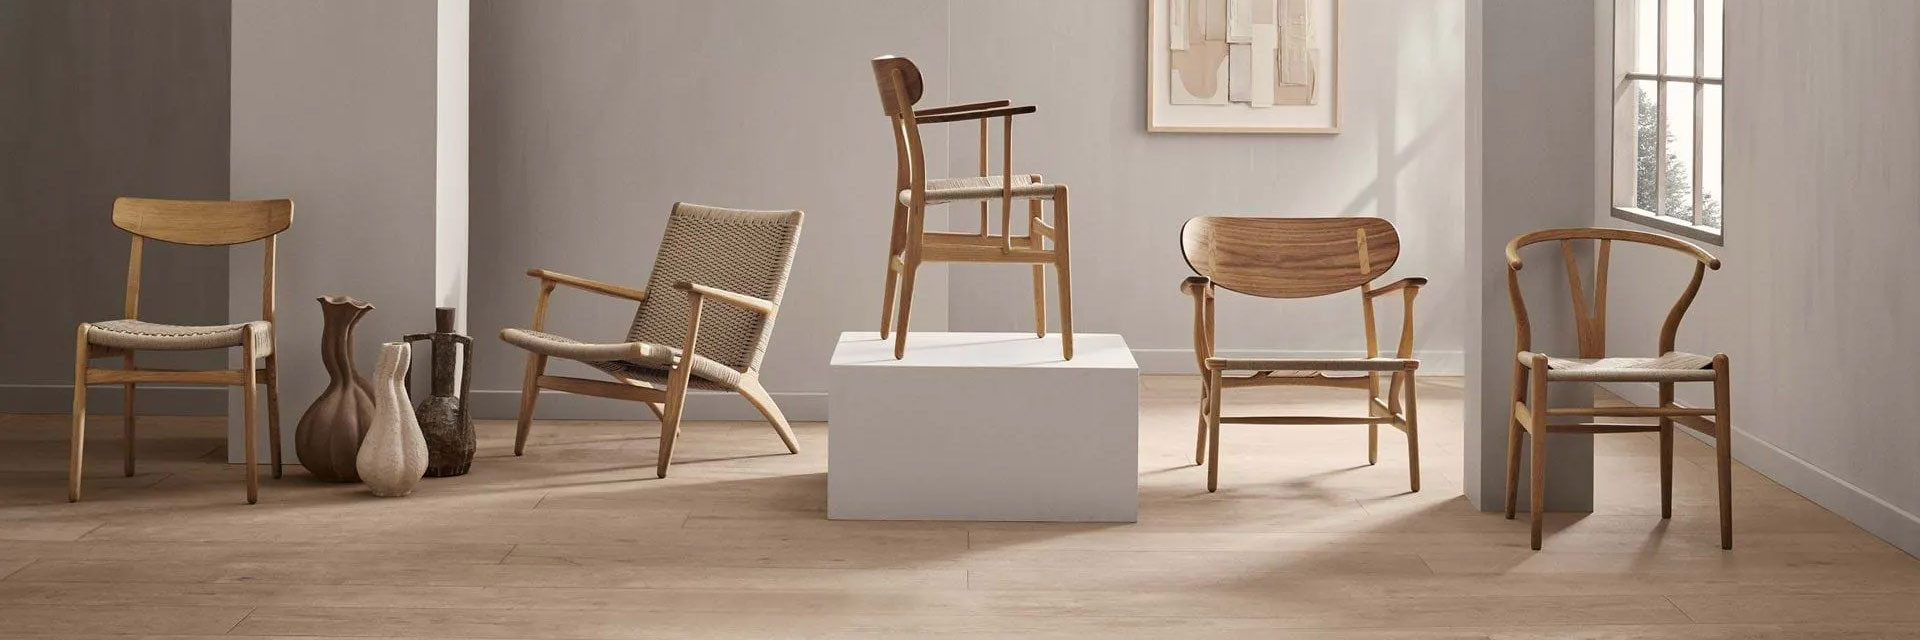 Chaises scandinaves et chaises en bois style design danois